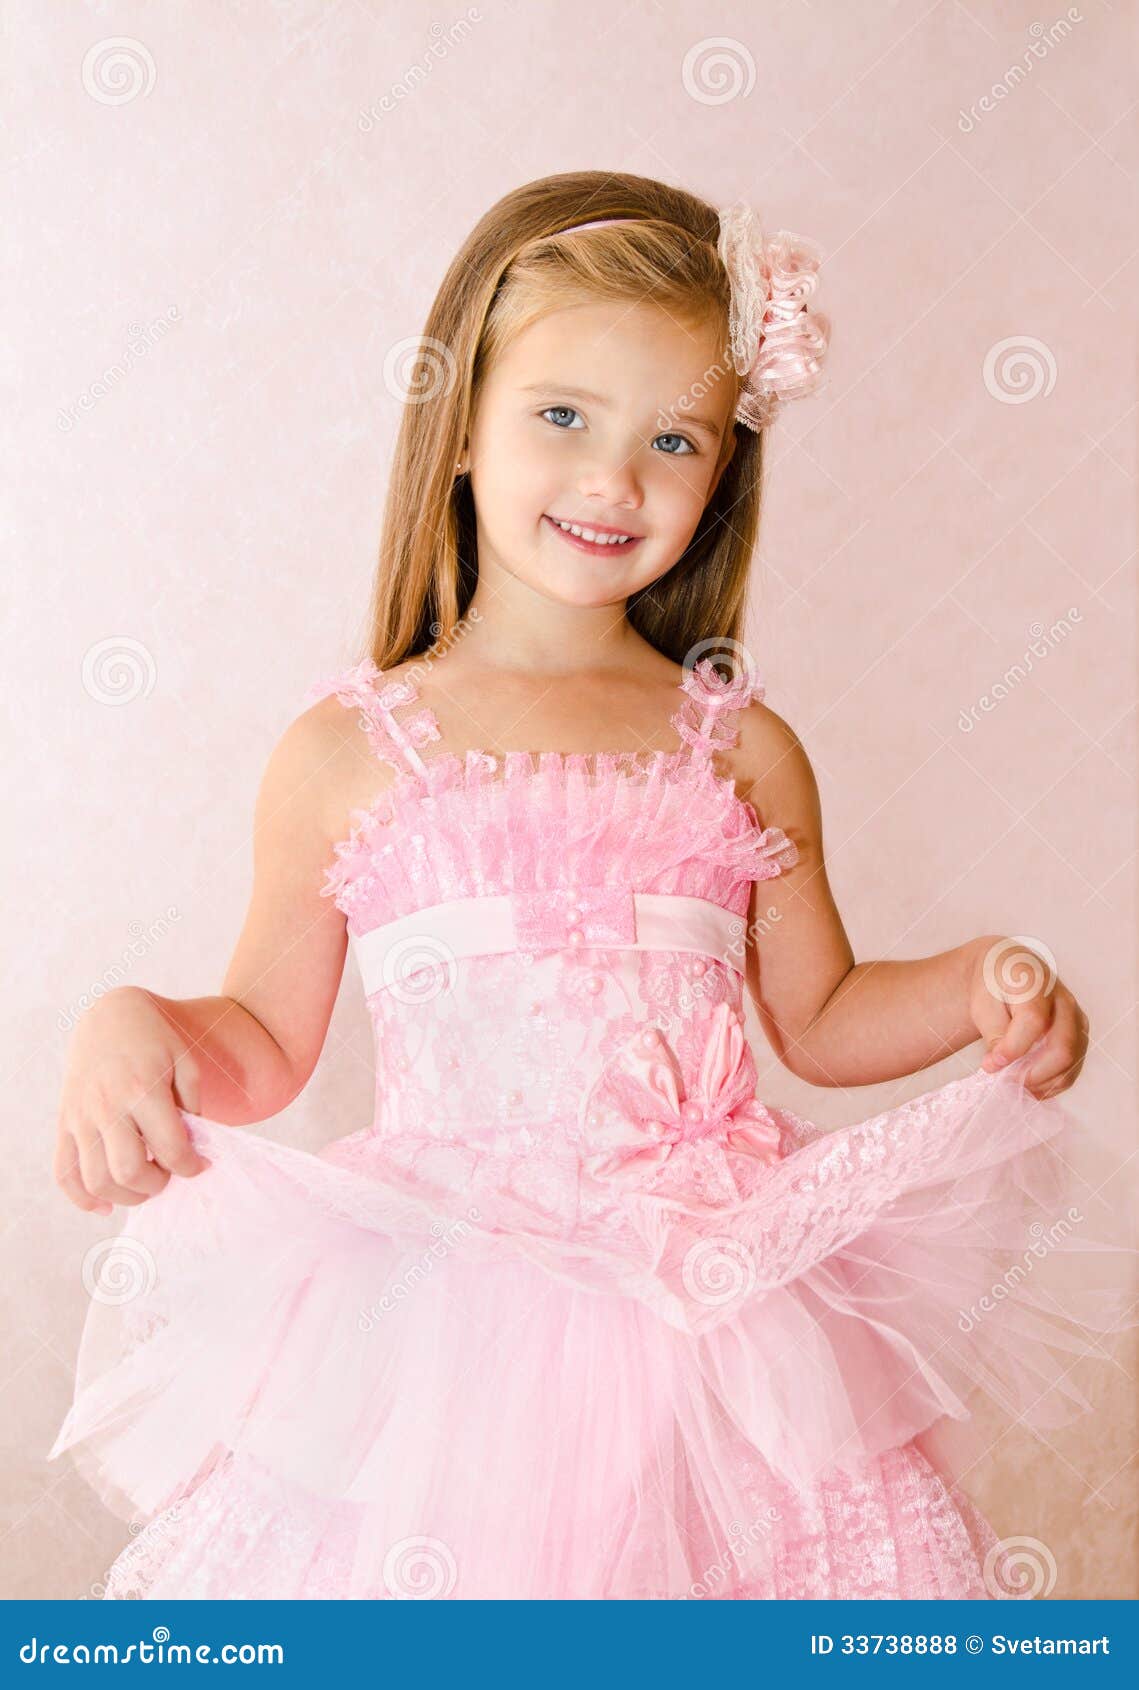 cute girl in pink dress